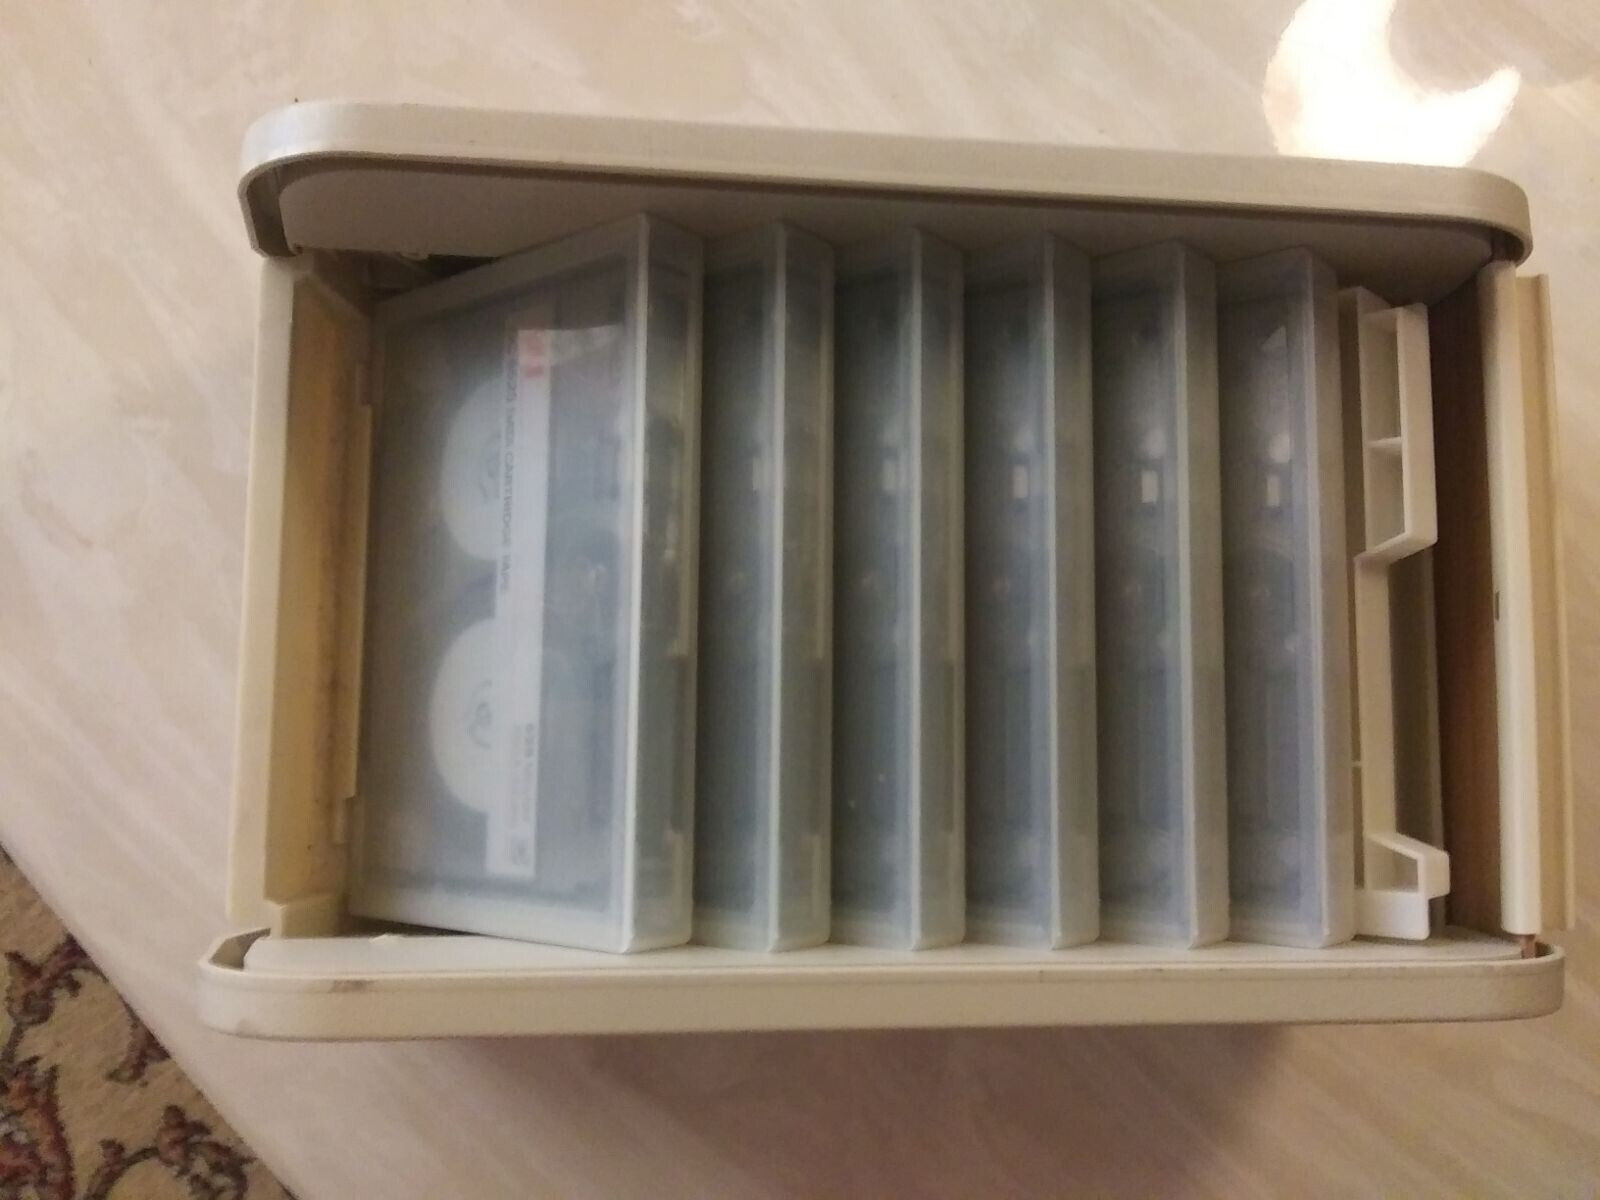 3M DC 6525 525mb Data Cartridge QIC Tapes x6 + Case       circa 1991